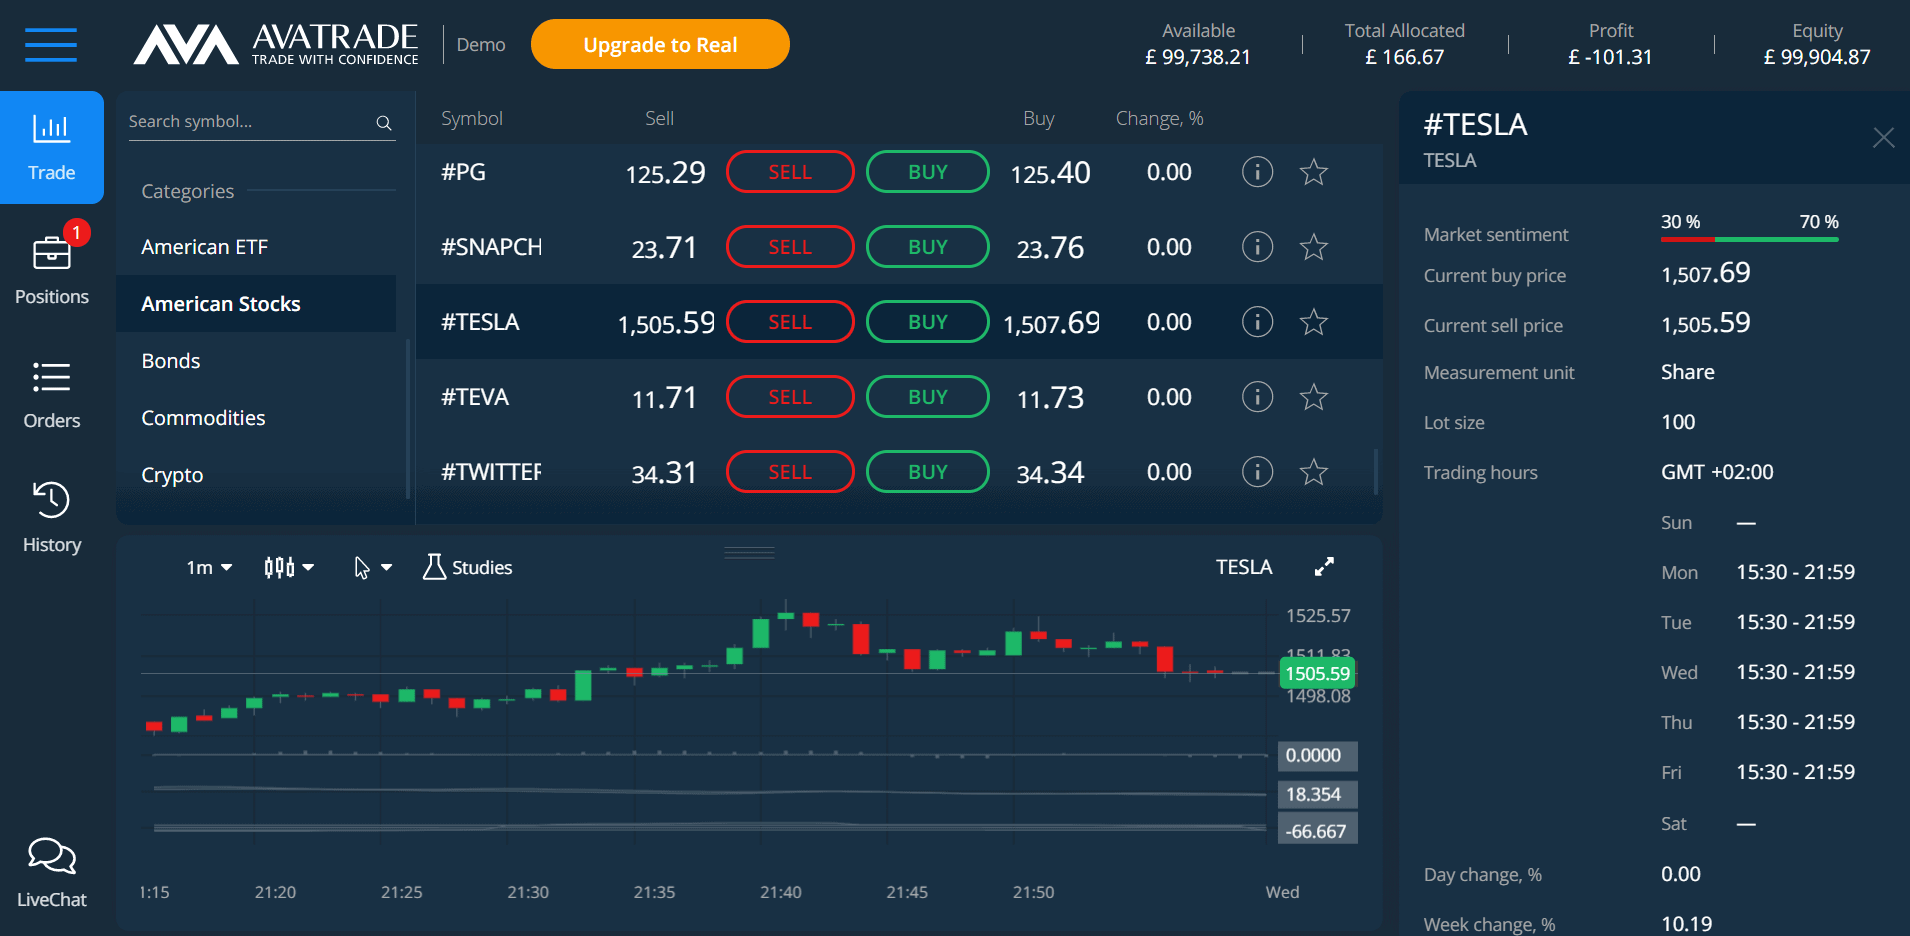 Avatrade's trading dashboard